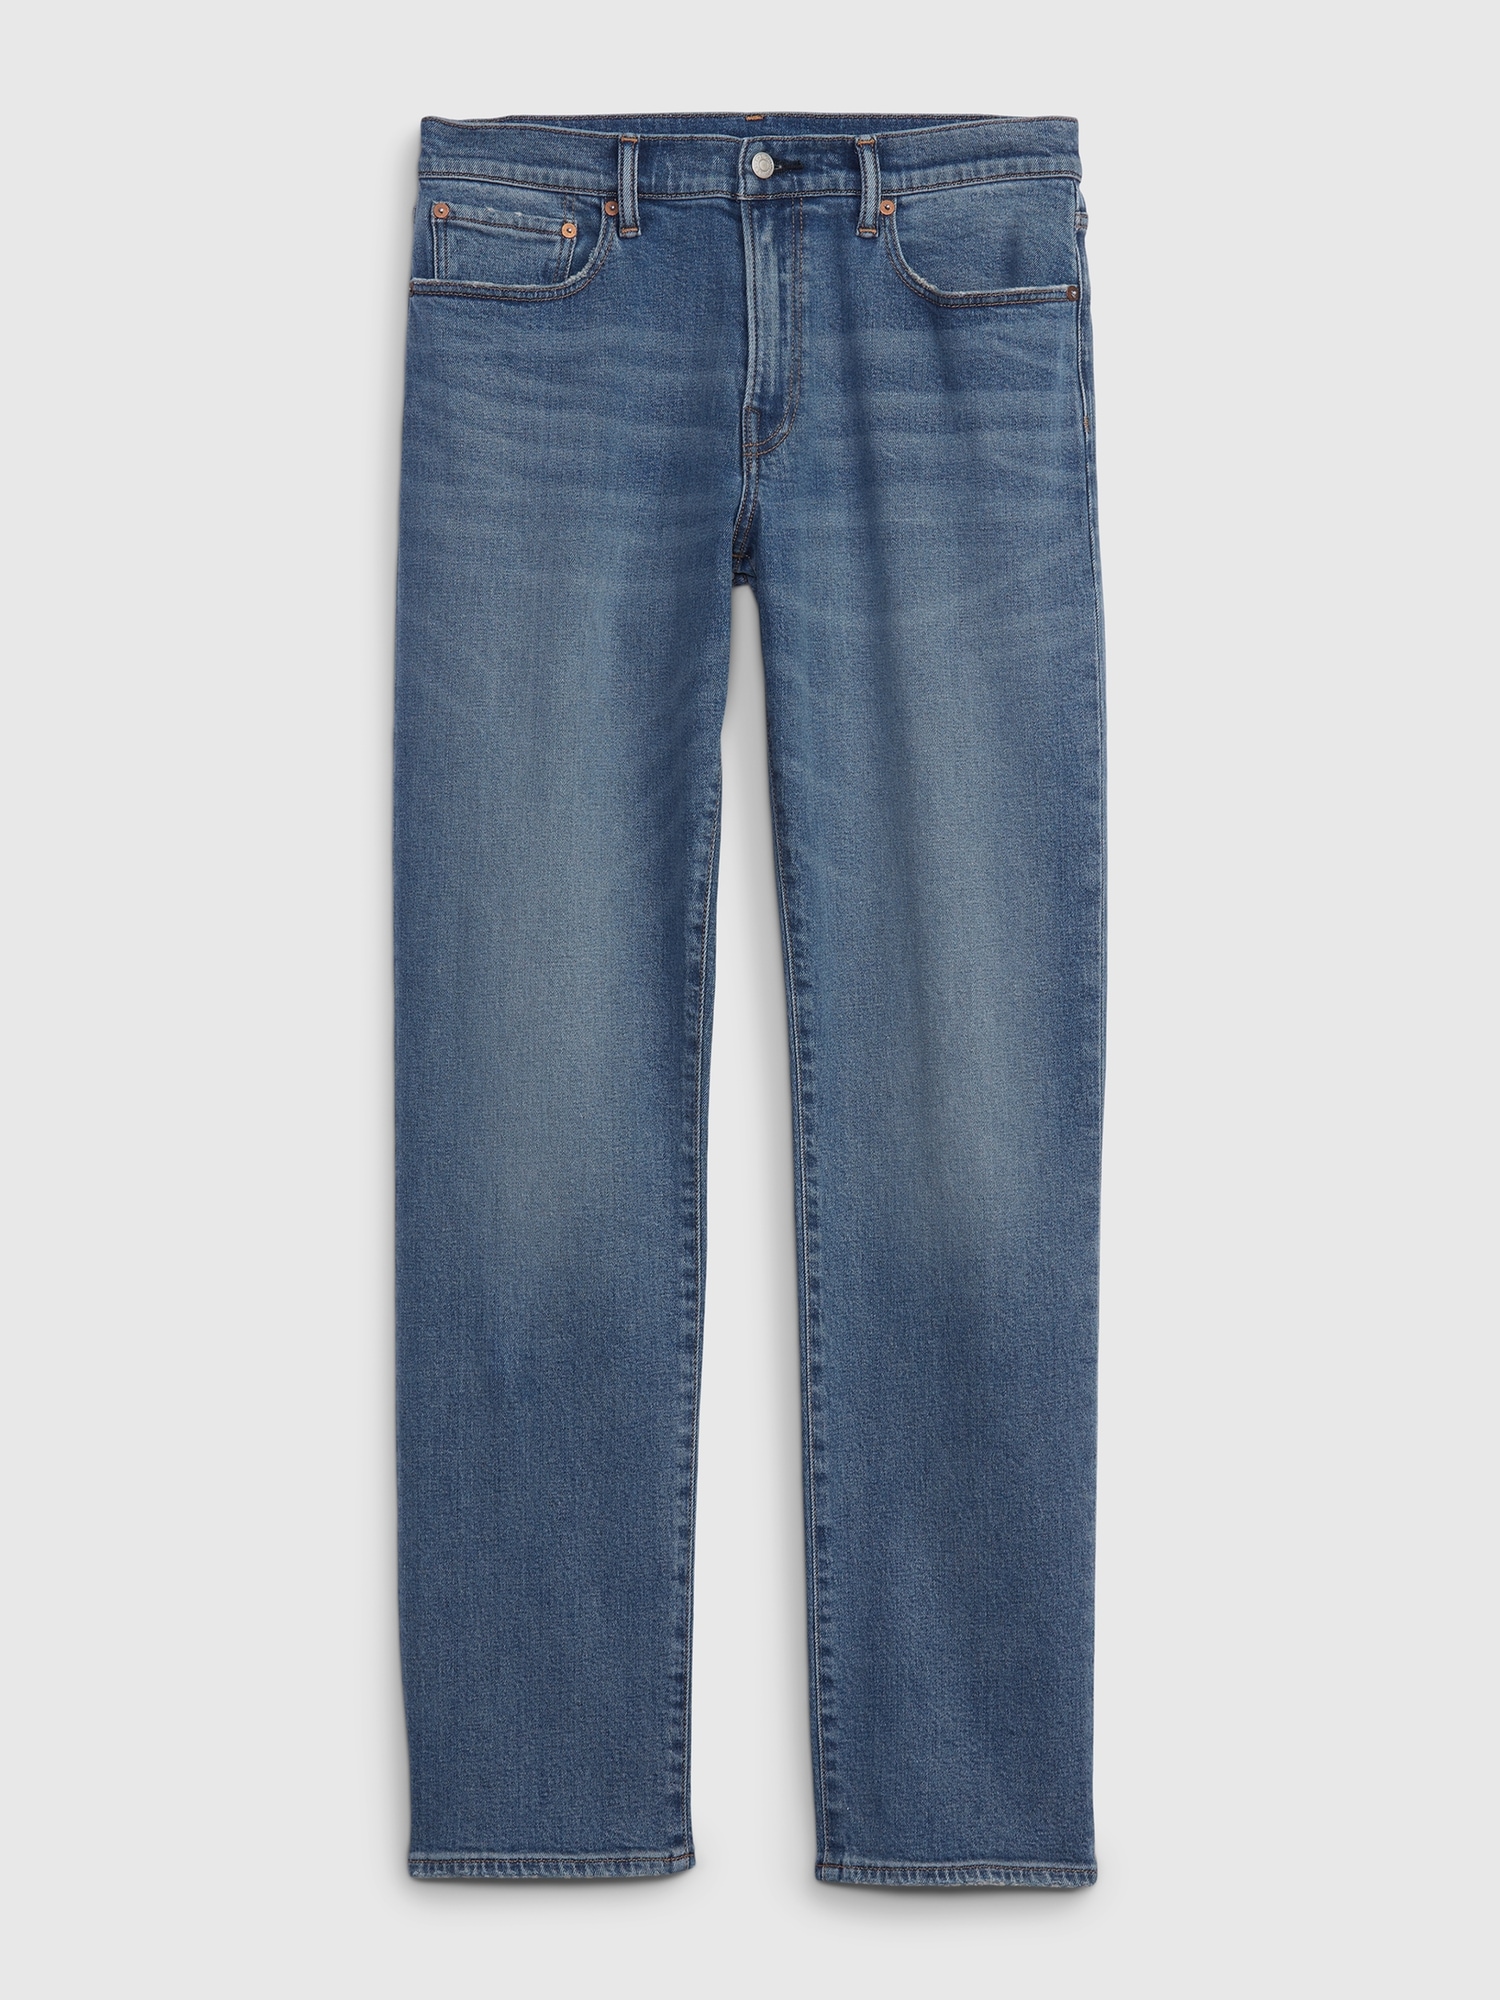 Soft Flex Straight Jeans | Gap